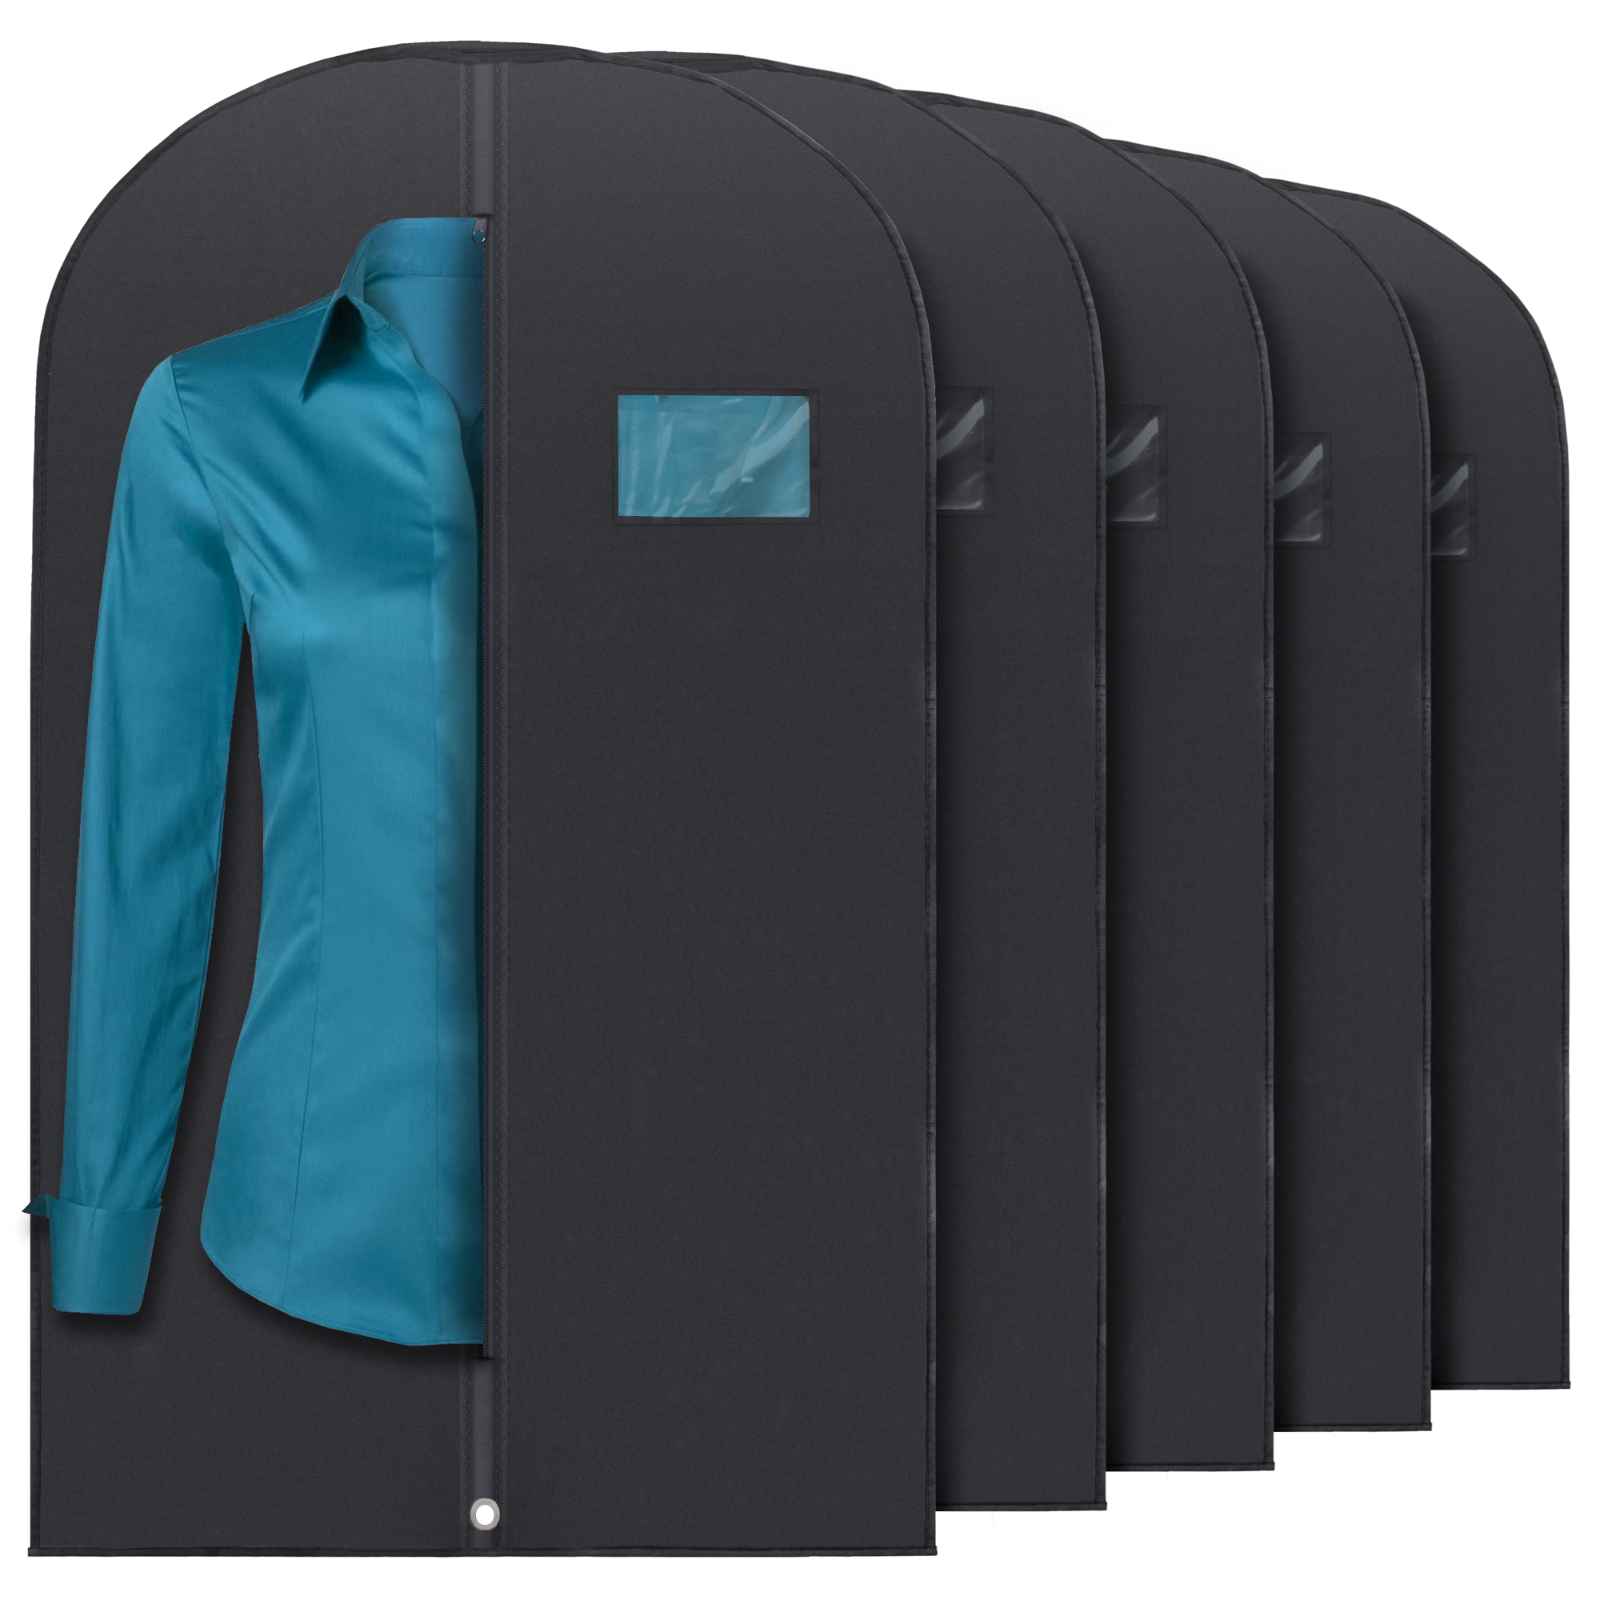 5 Pcs 40-inch Garment Bag For Suit Dress Storage Black With Transparent Window